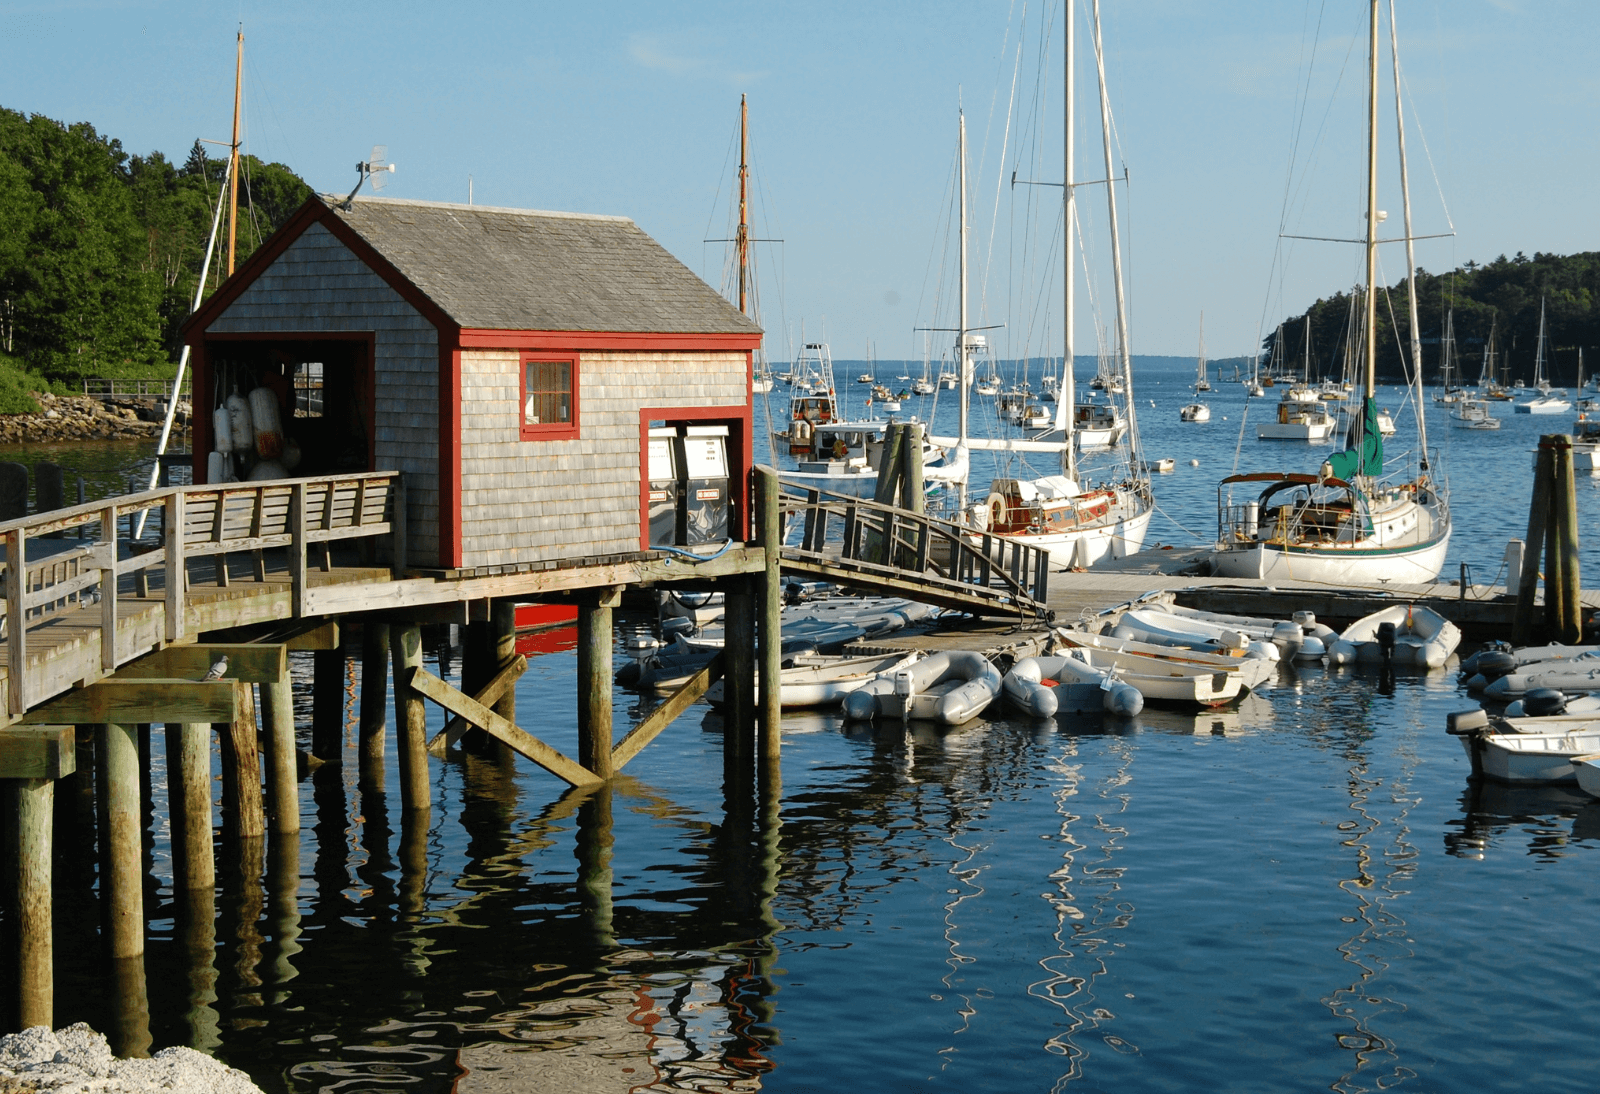 A harbor scene in Maine